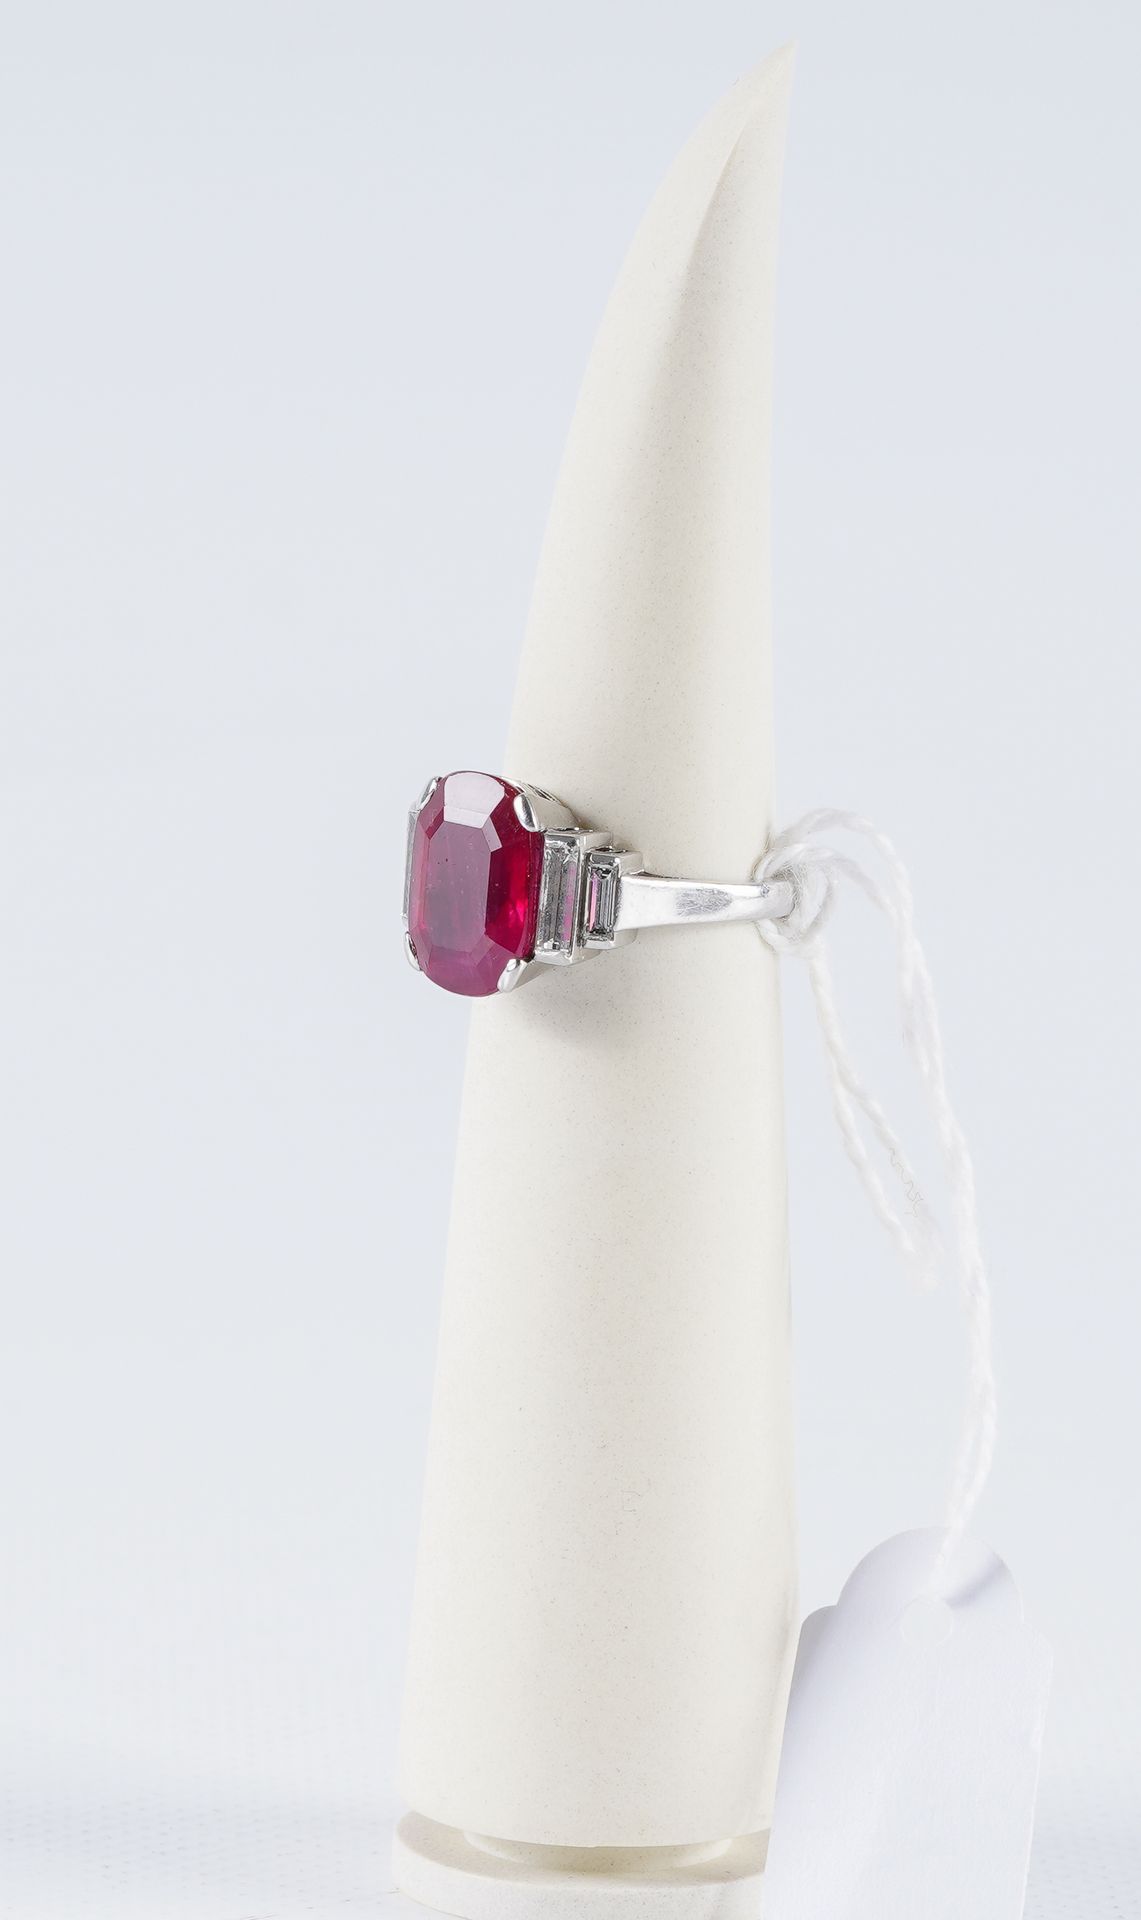 Bague en platine, rubis et diamants 铂金戒指，镶嵌一颗红宝石和4颗长方形钻石。毛重：6.50克。